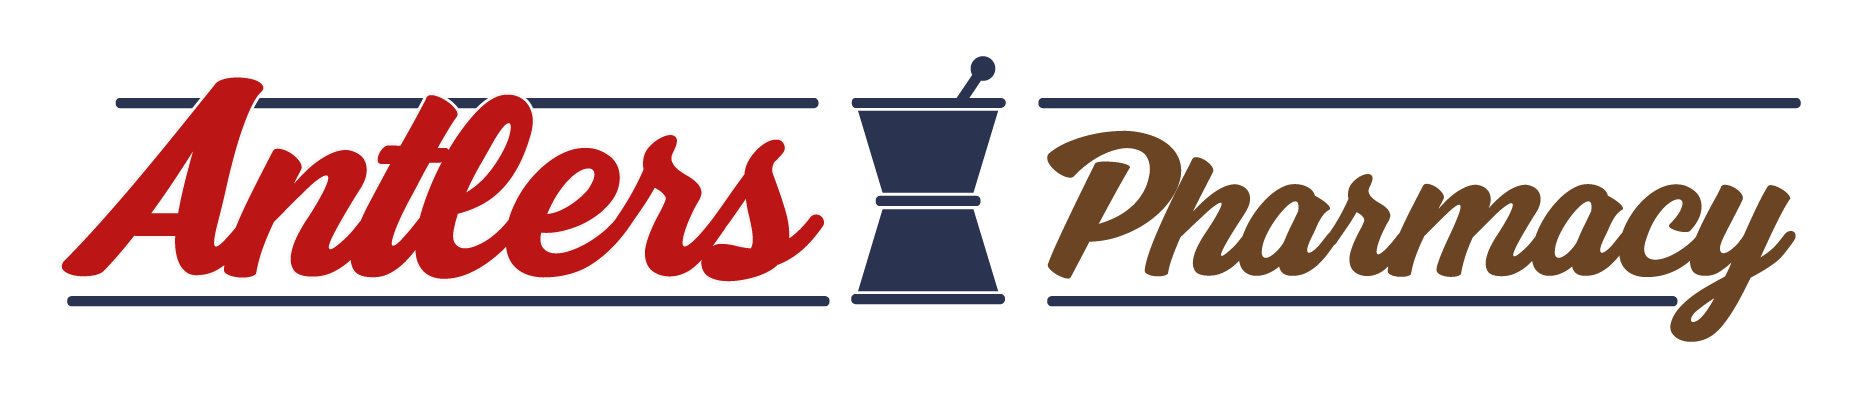 Antlers Pharmacy Logo